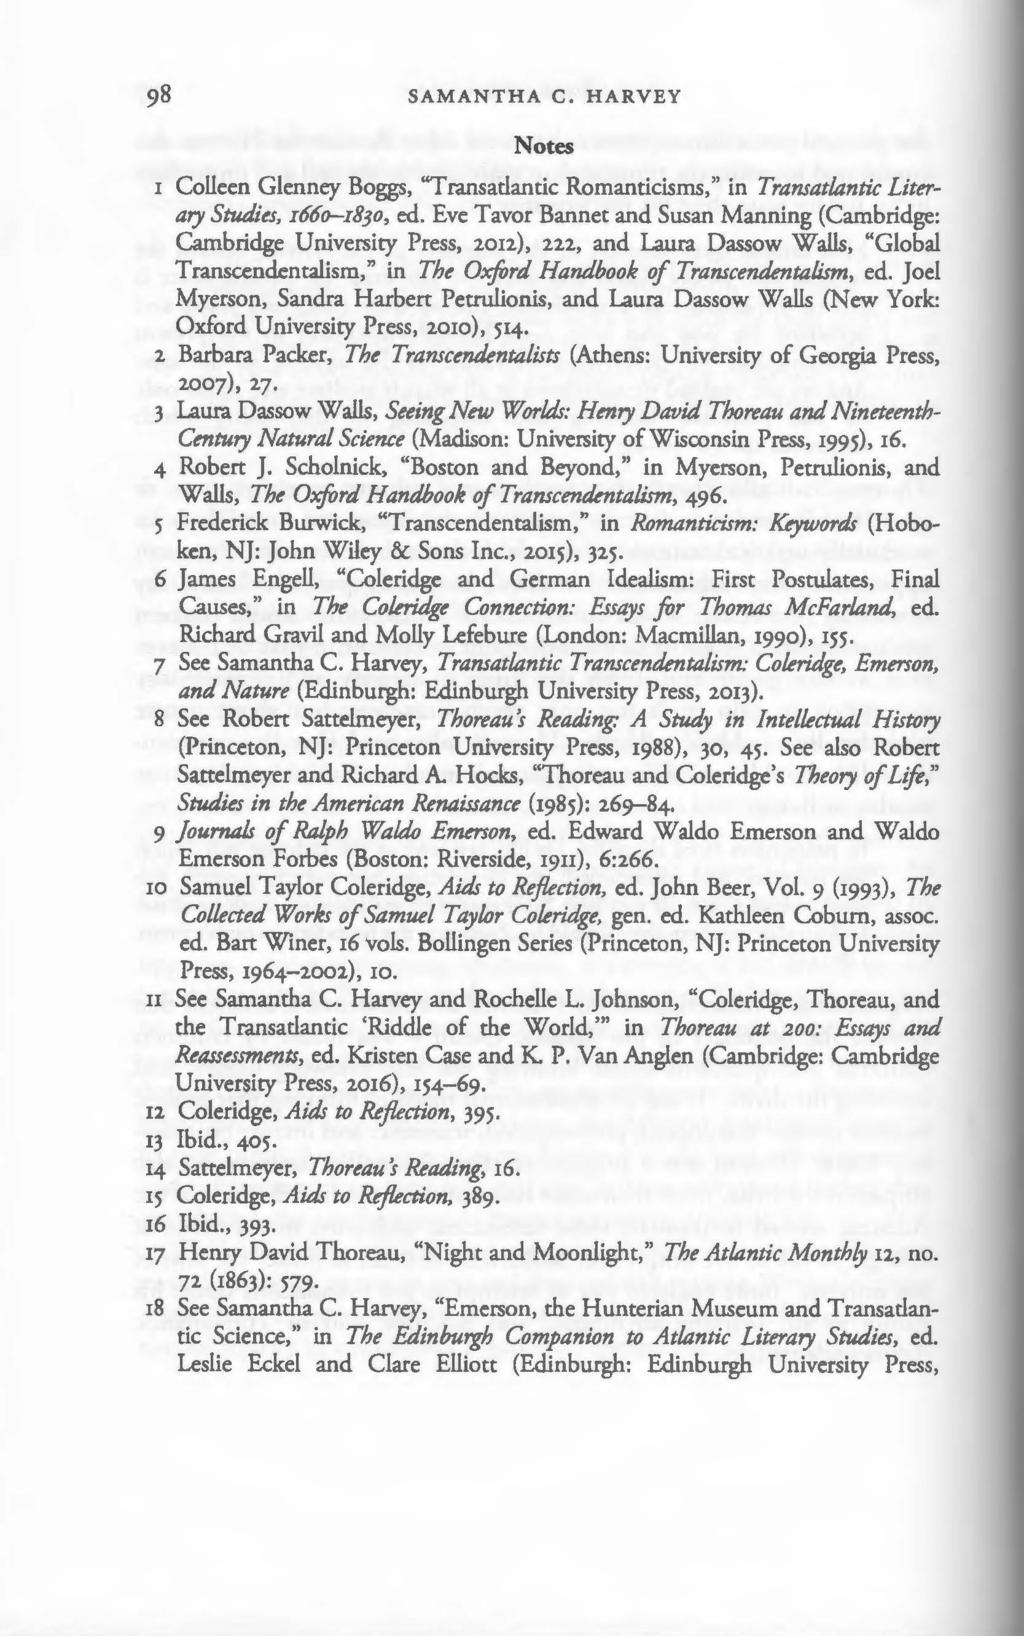 SAMANTHA C. HARVEY Notes l Colleen Glenney Boggs, "Transatlantic Romanticisms," in Transatlantic Literary Studies, r66rr-r830, ed.